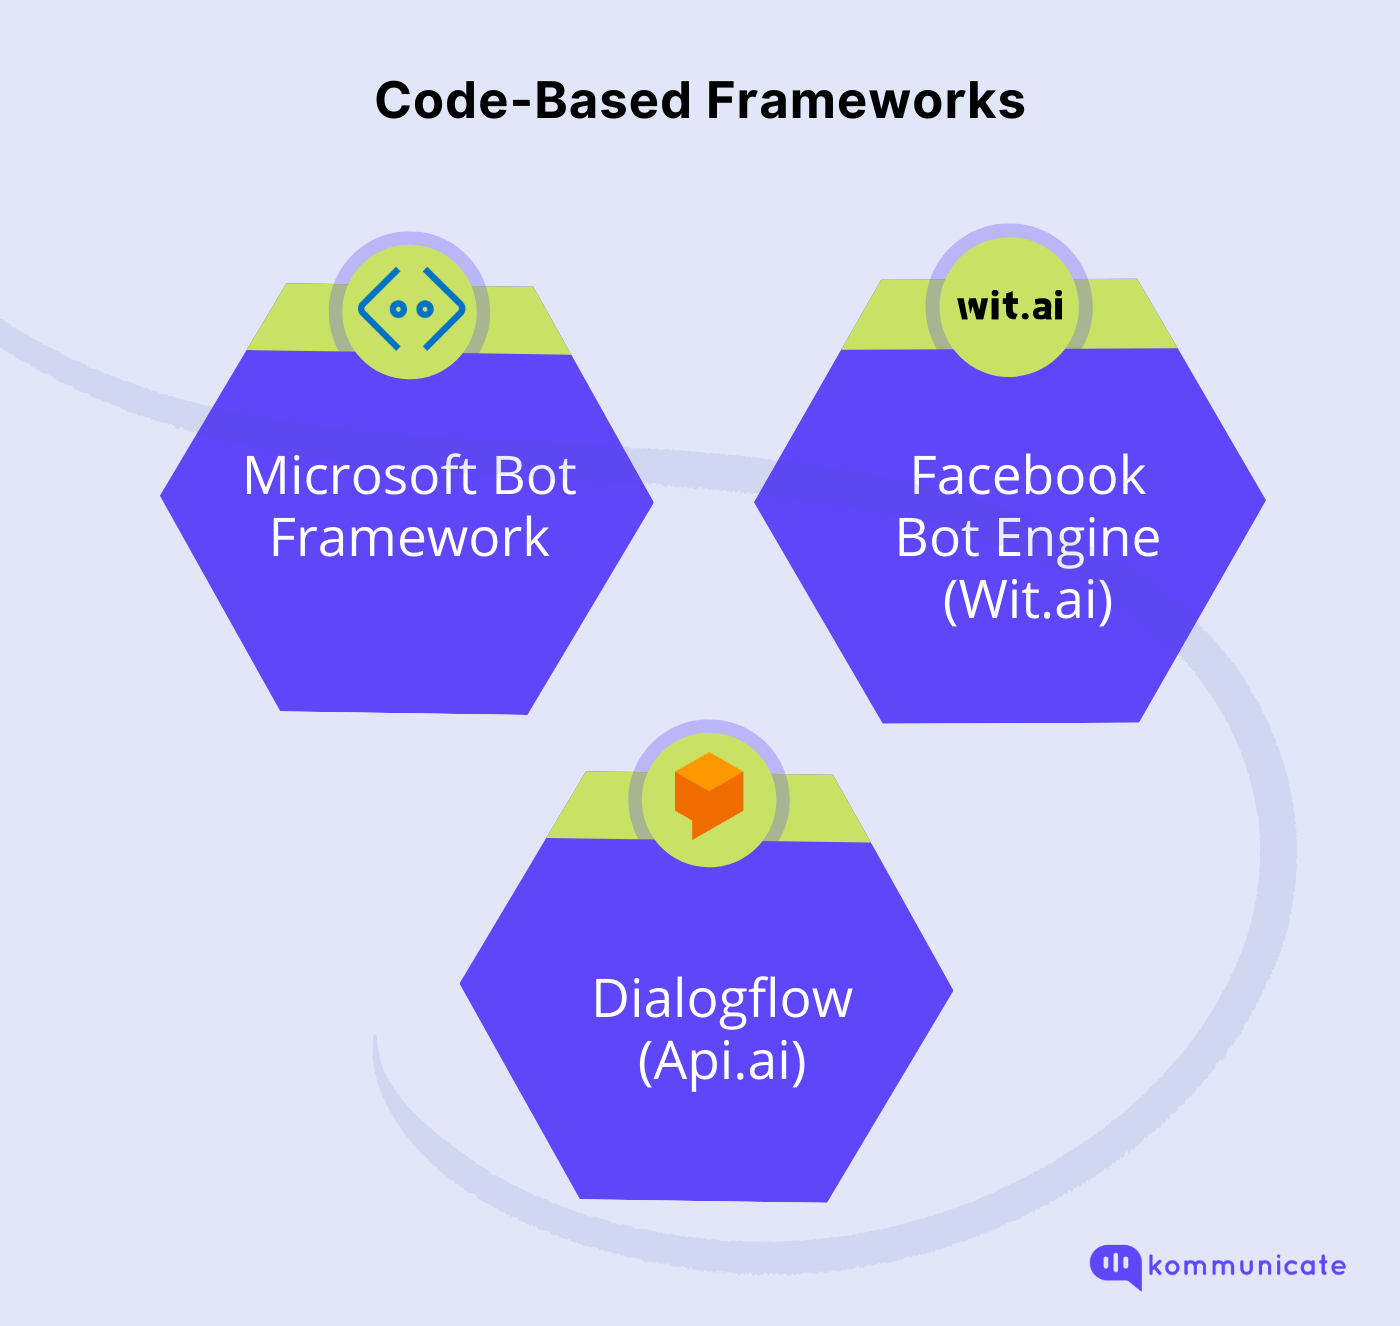 Code-Based Frameworks